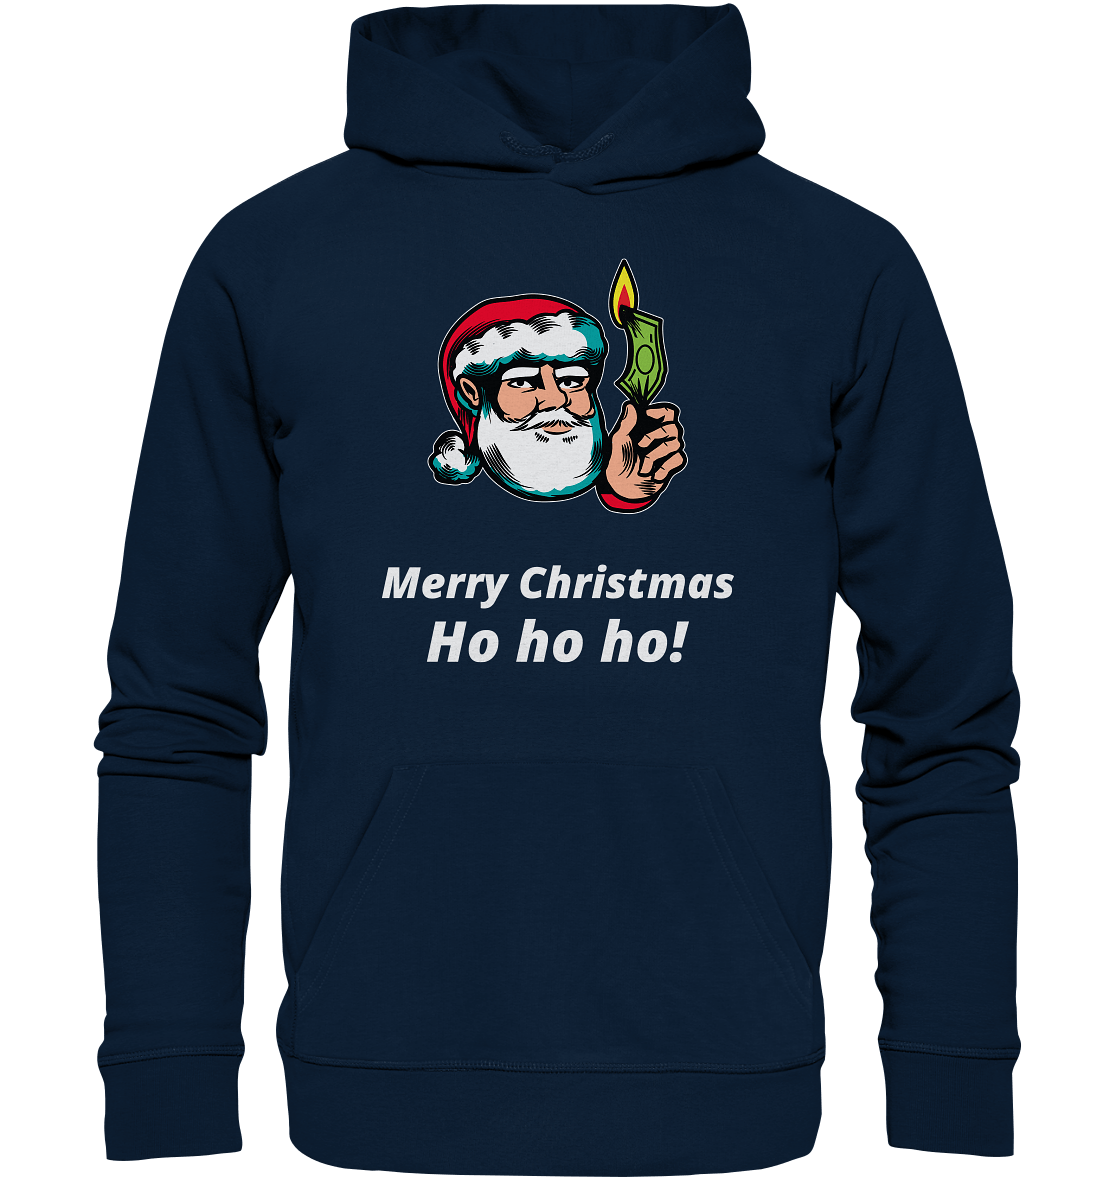 Merry-Christmas-Ho-ho-ho-Xmas-unisex-navy-blau-Pullover-fuer-Erwachsene